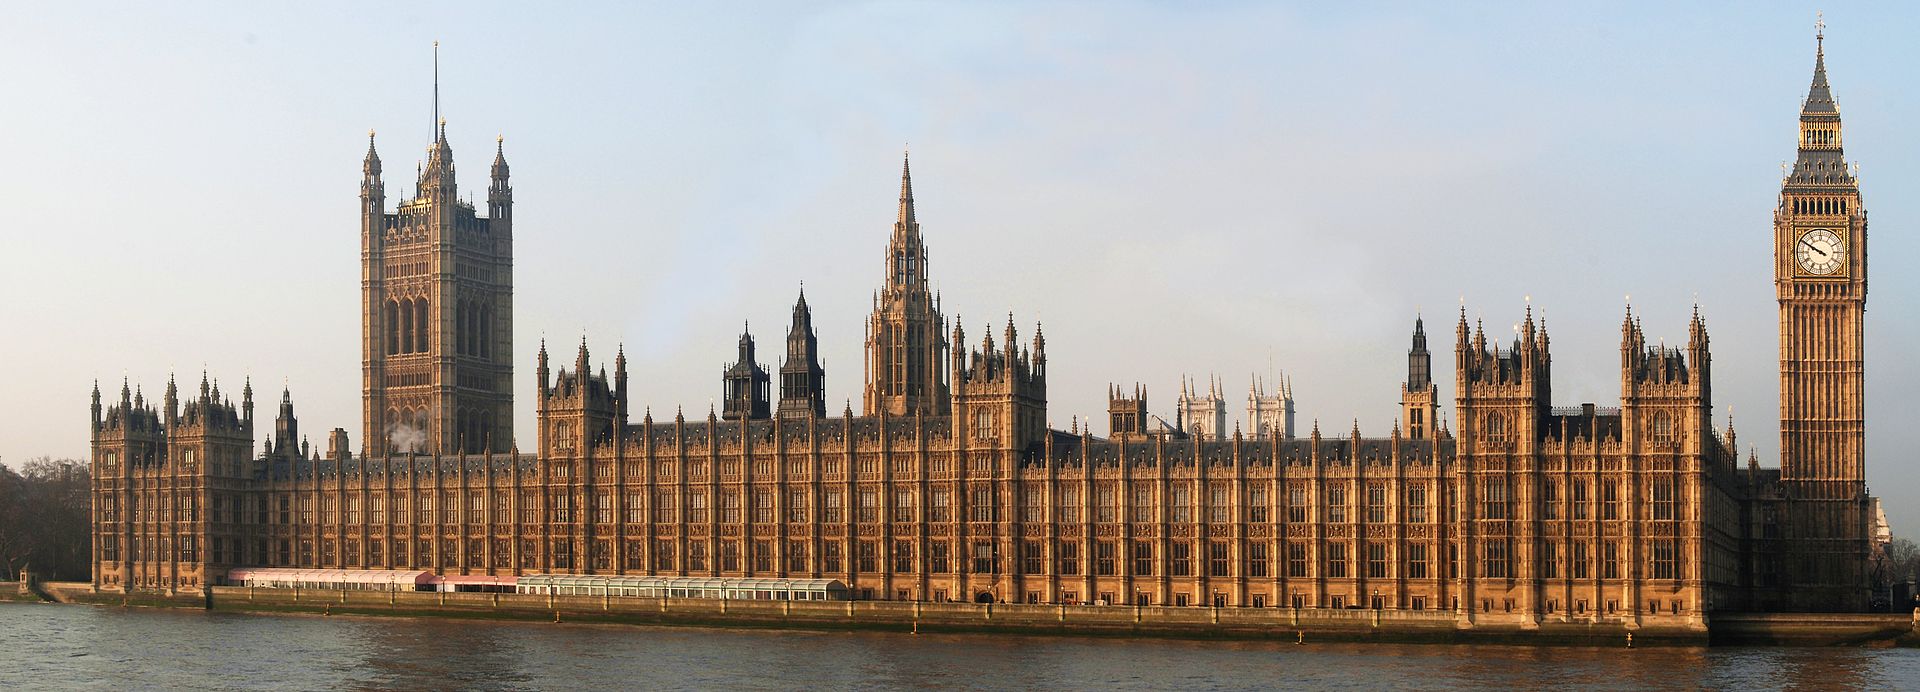 1920px-London_Parliament_2007-1.jpg